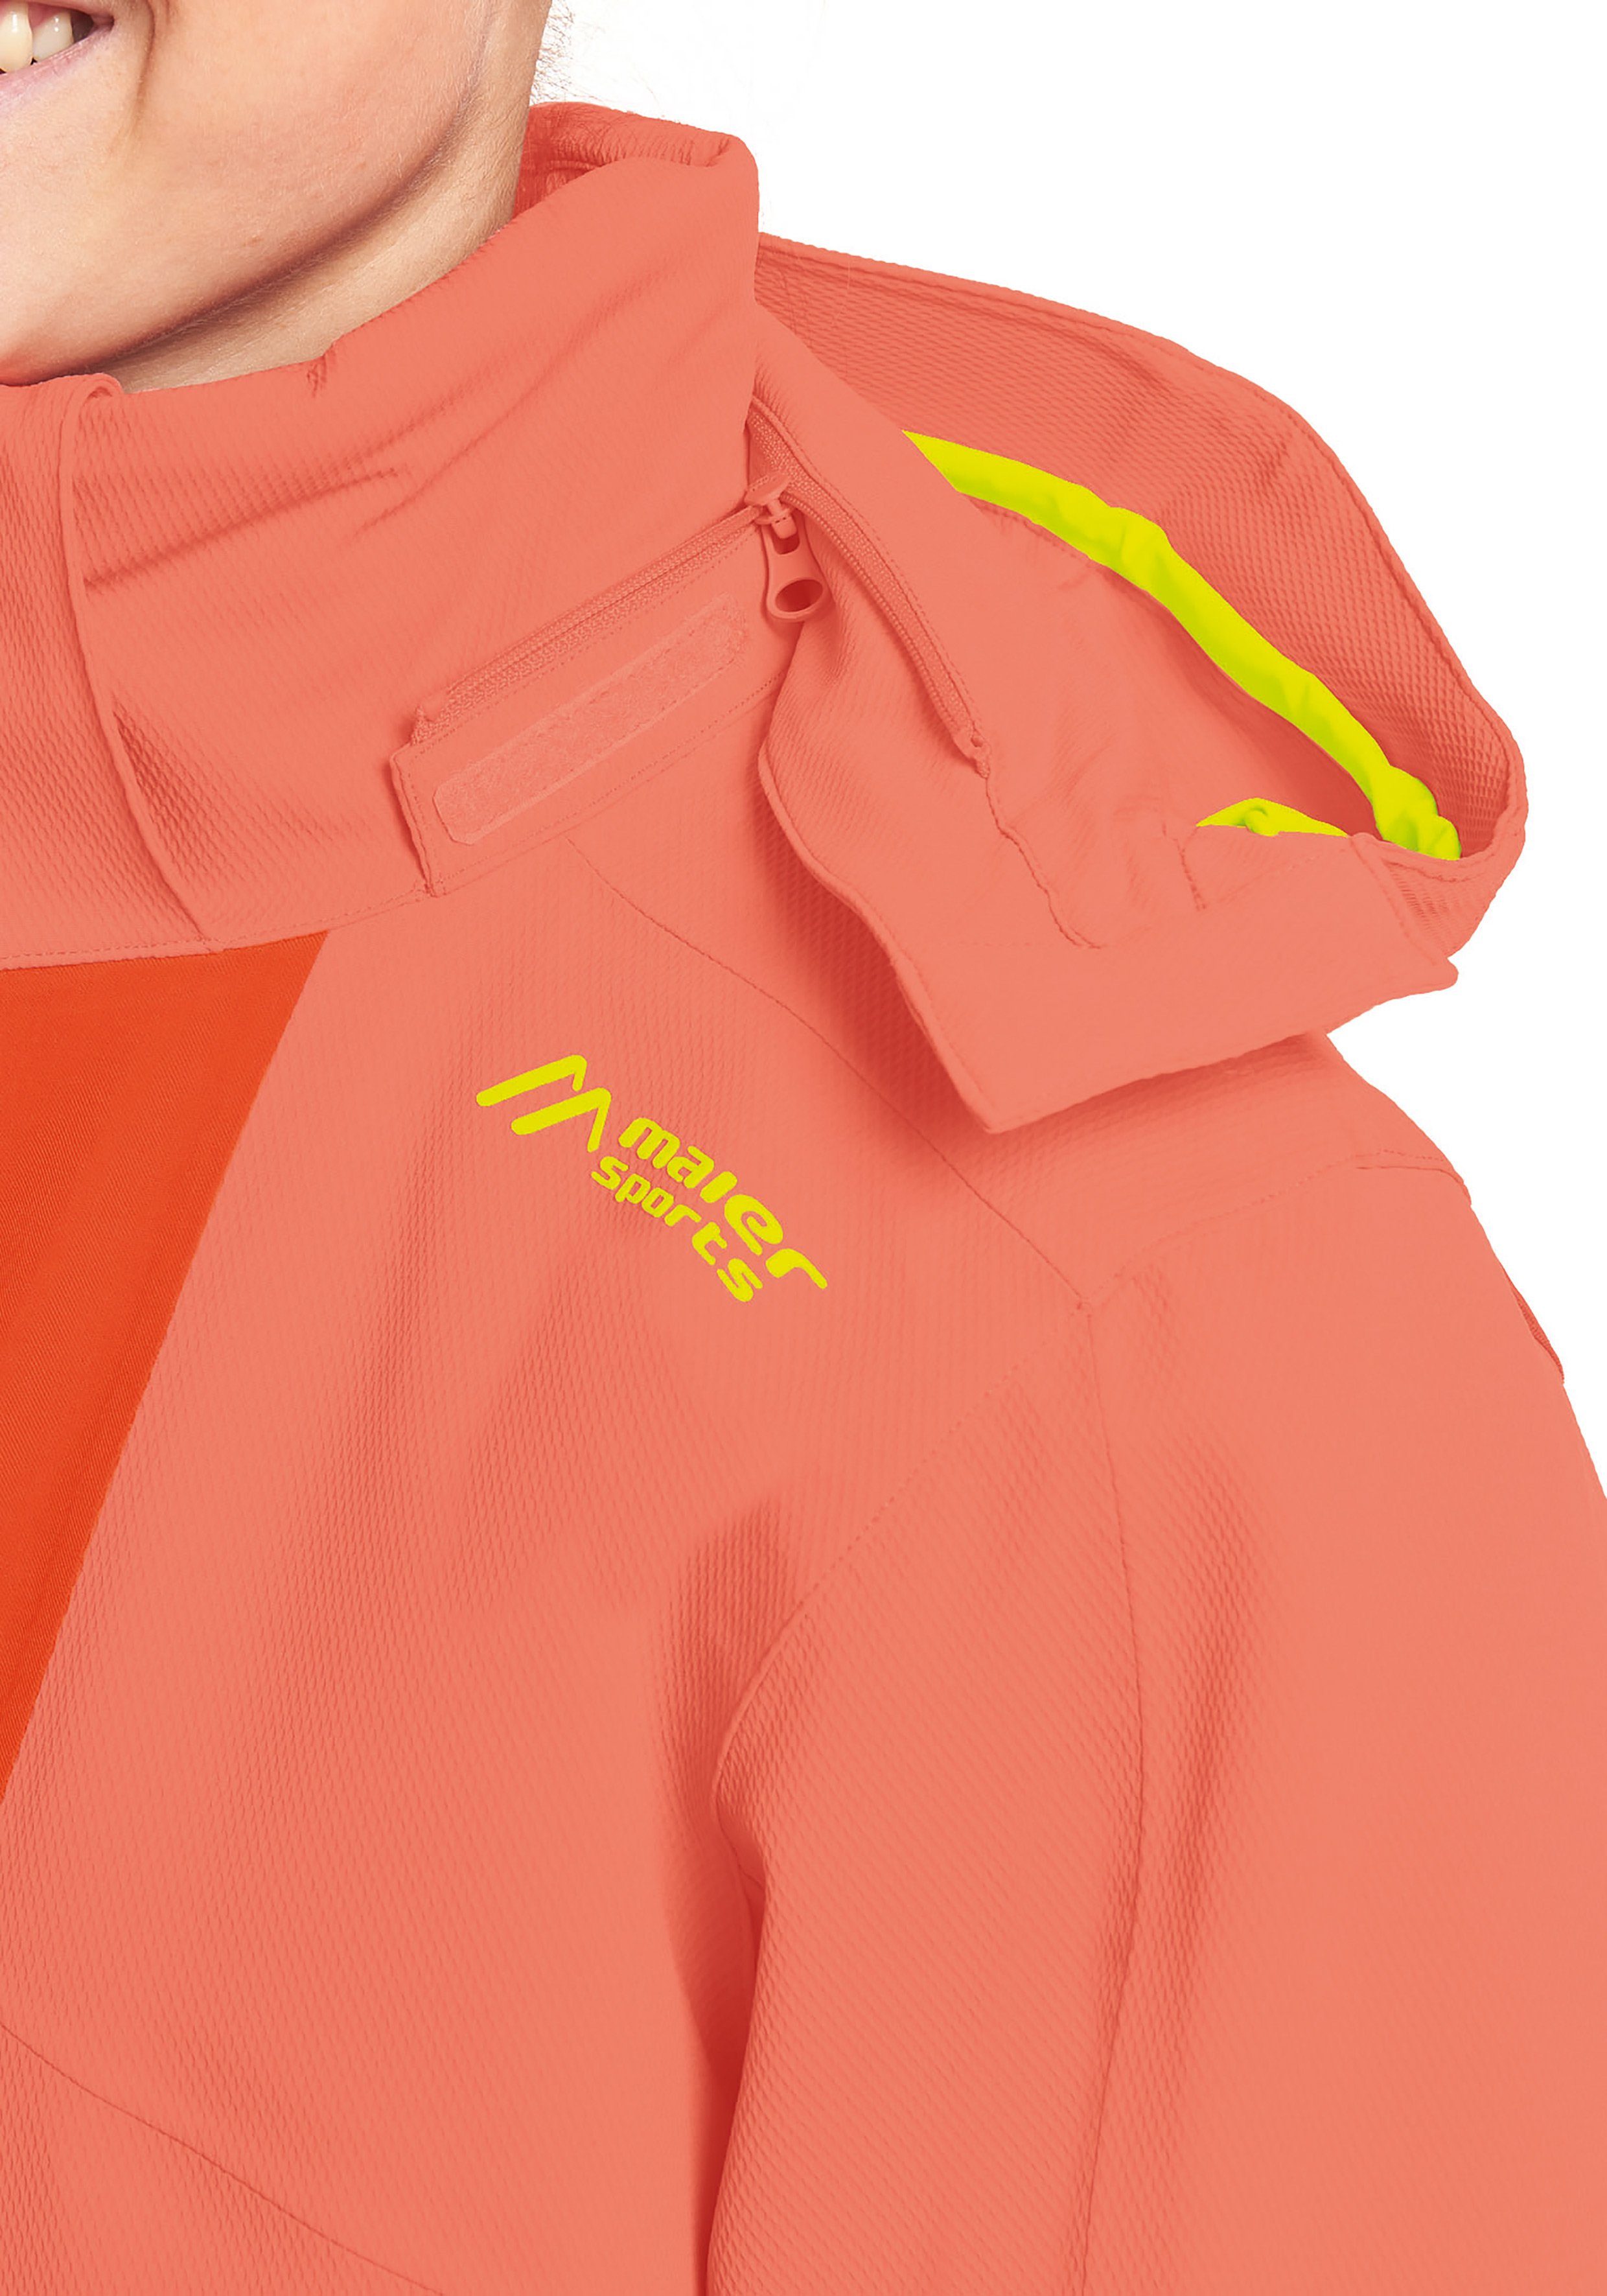 Maier Sports Skijacke orangerot Skijacke W und Impulse für Freeride Modern designte – Fast perfekt Piste